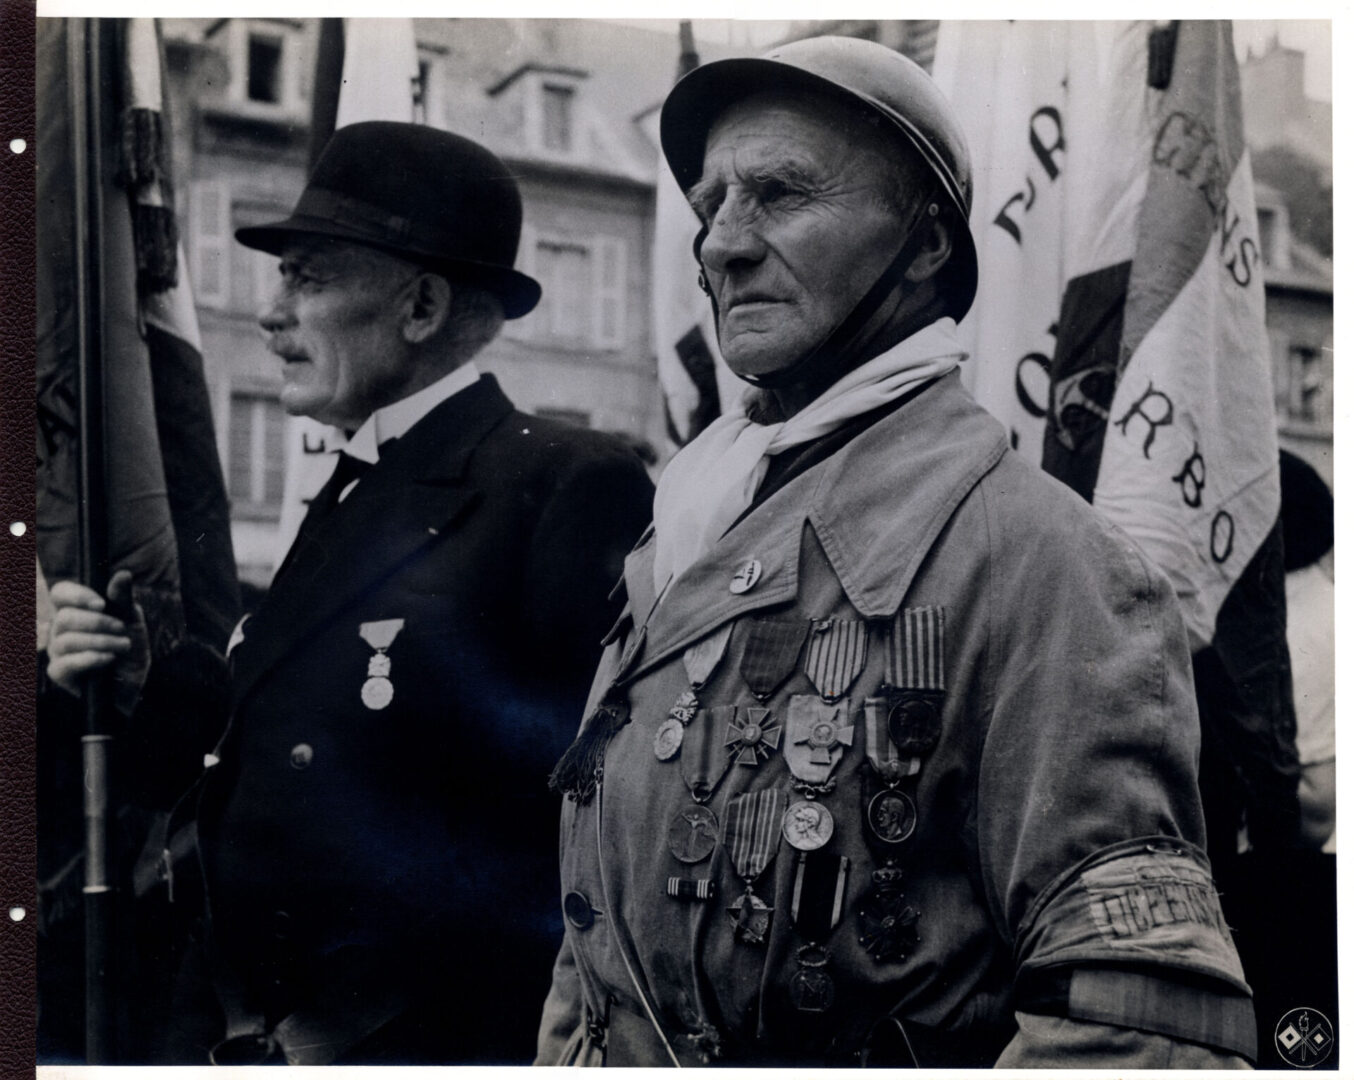 World War I veteran being honored at Bastille ceremony